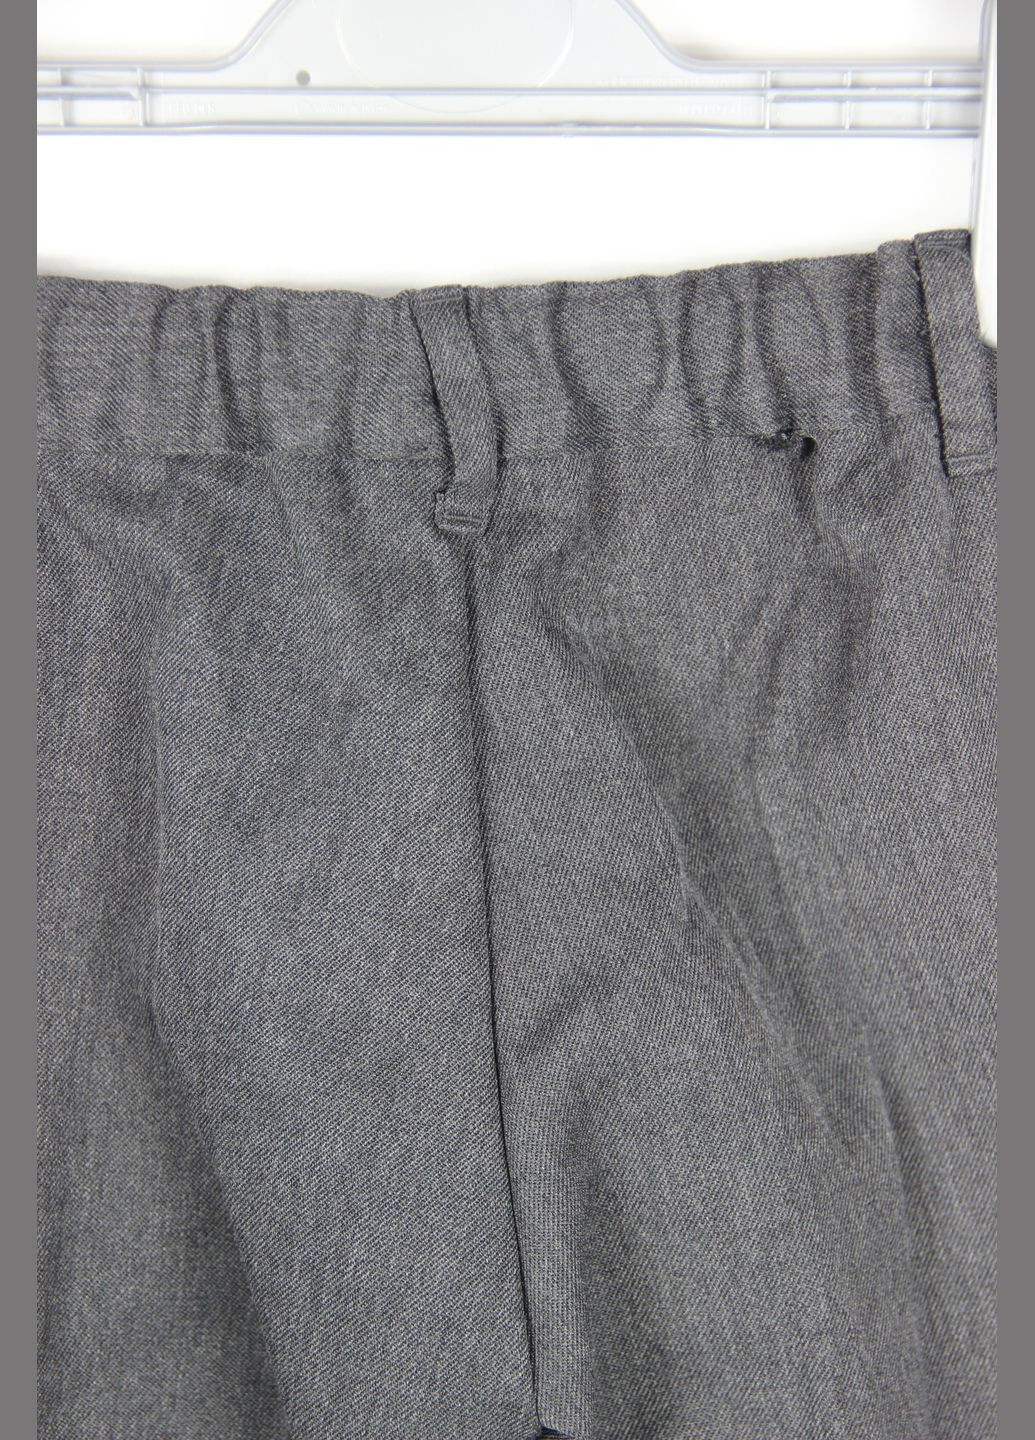 Серые летние брюки Primark